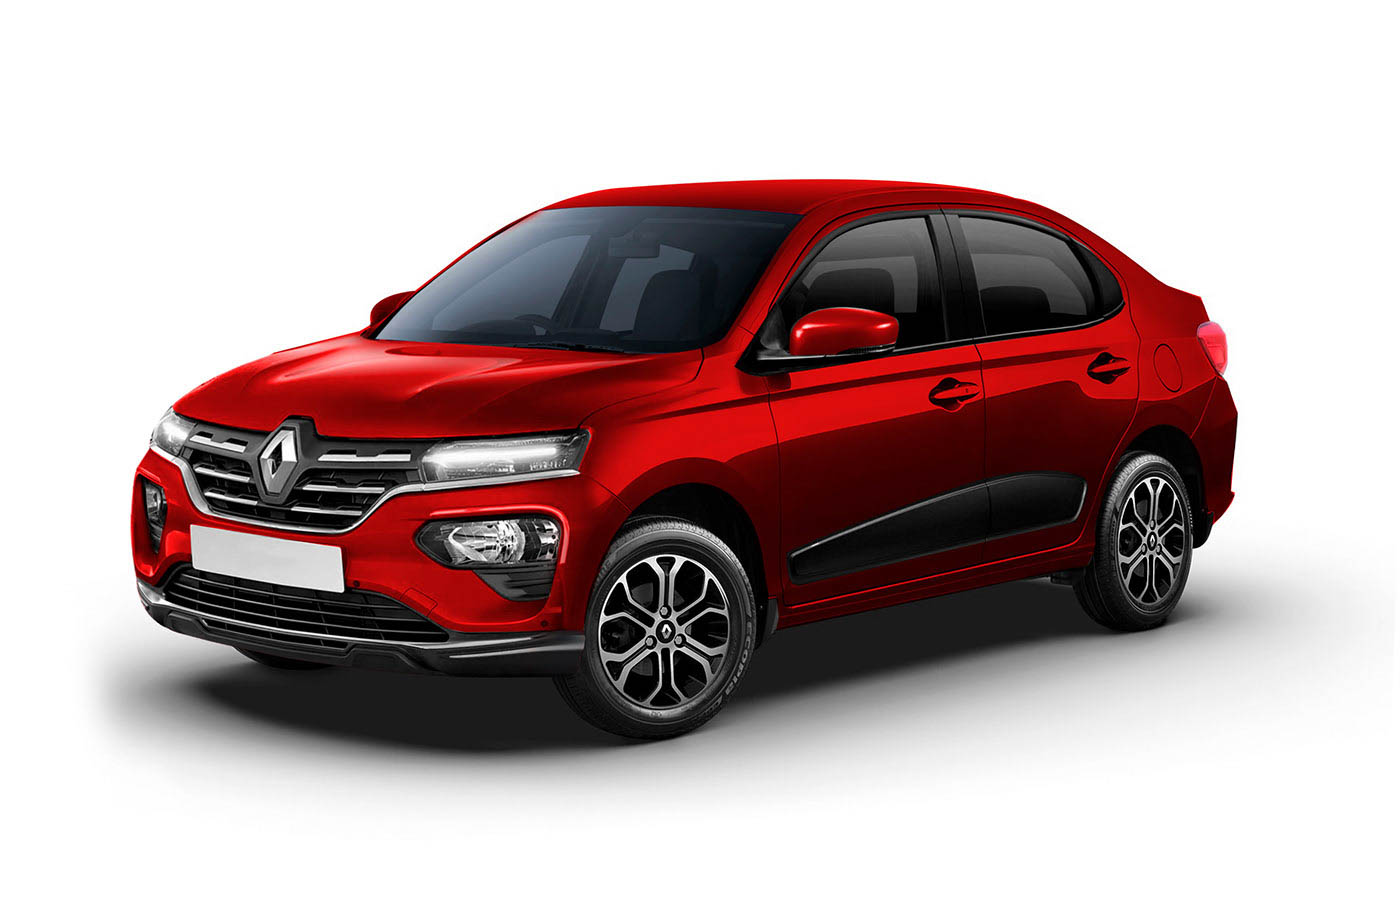 https://gaadiwaadi.com/wp-content/uploads/2020/05/Renault-Kwid-Based-Sedan-Rendered-1.jpg